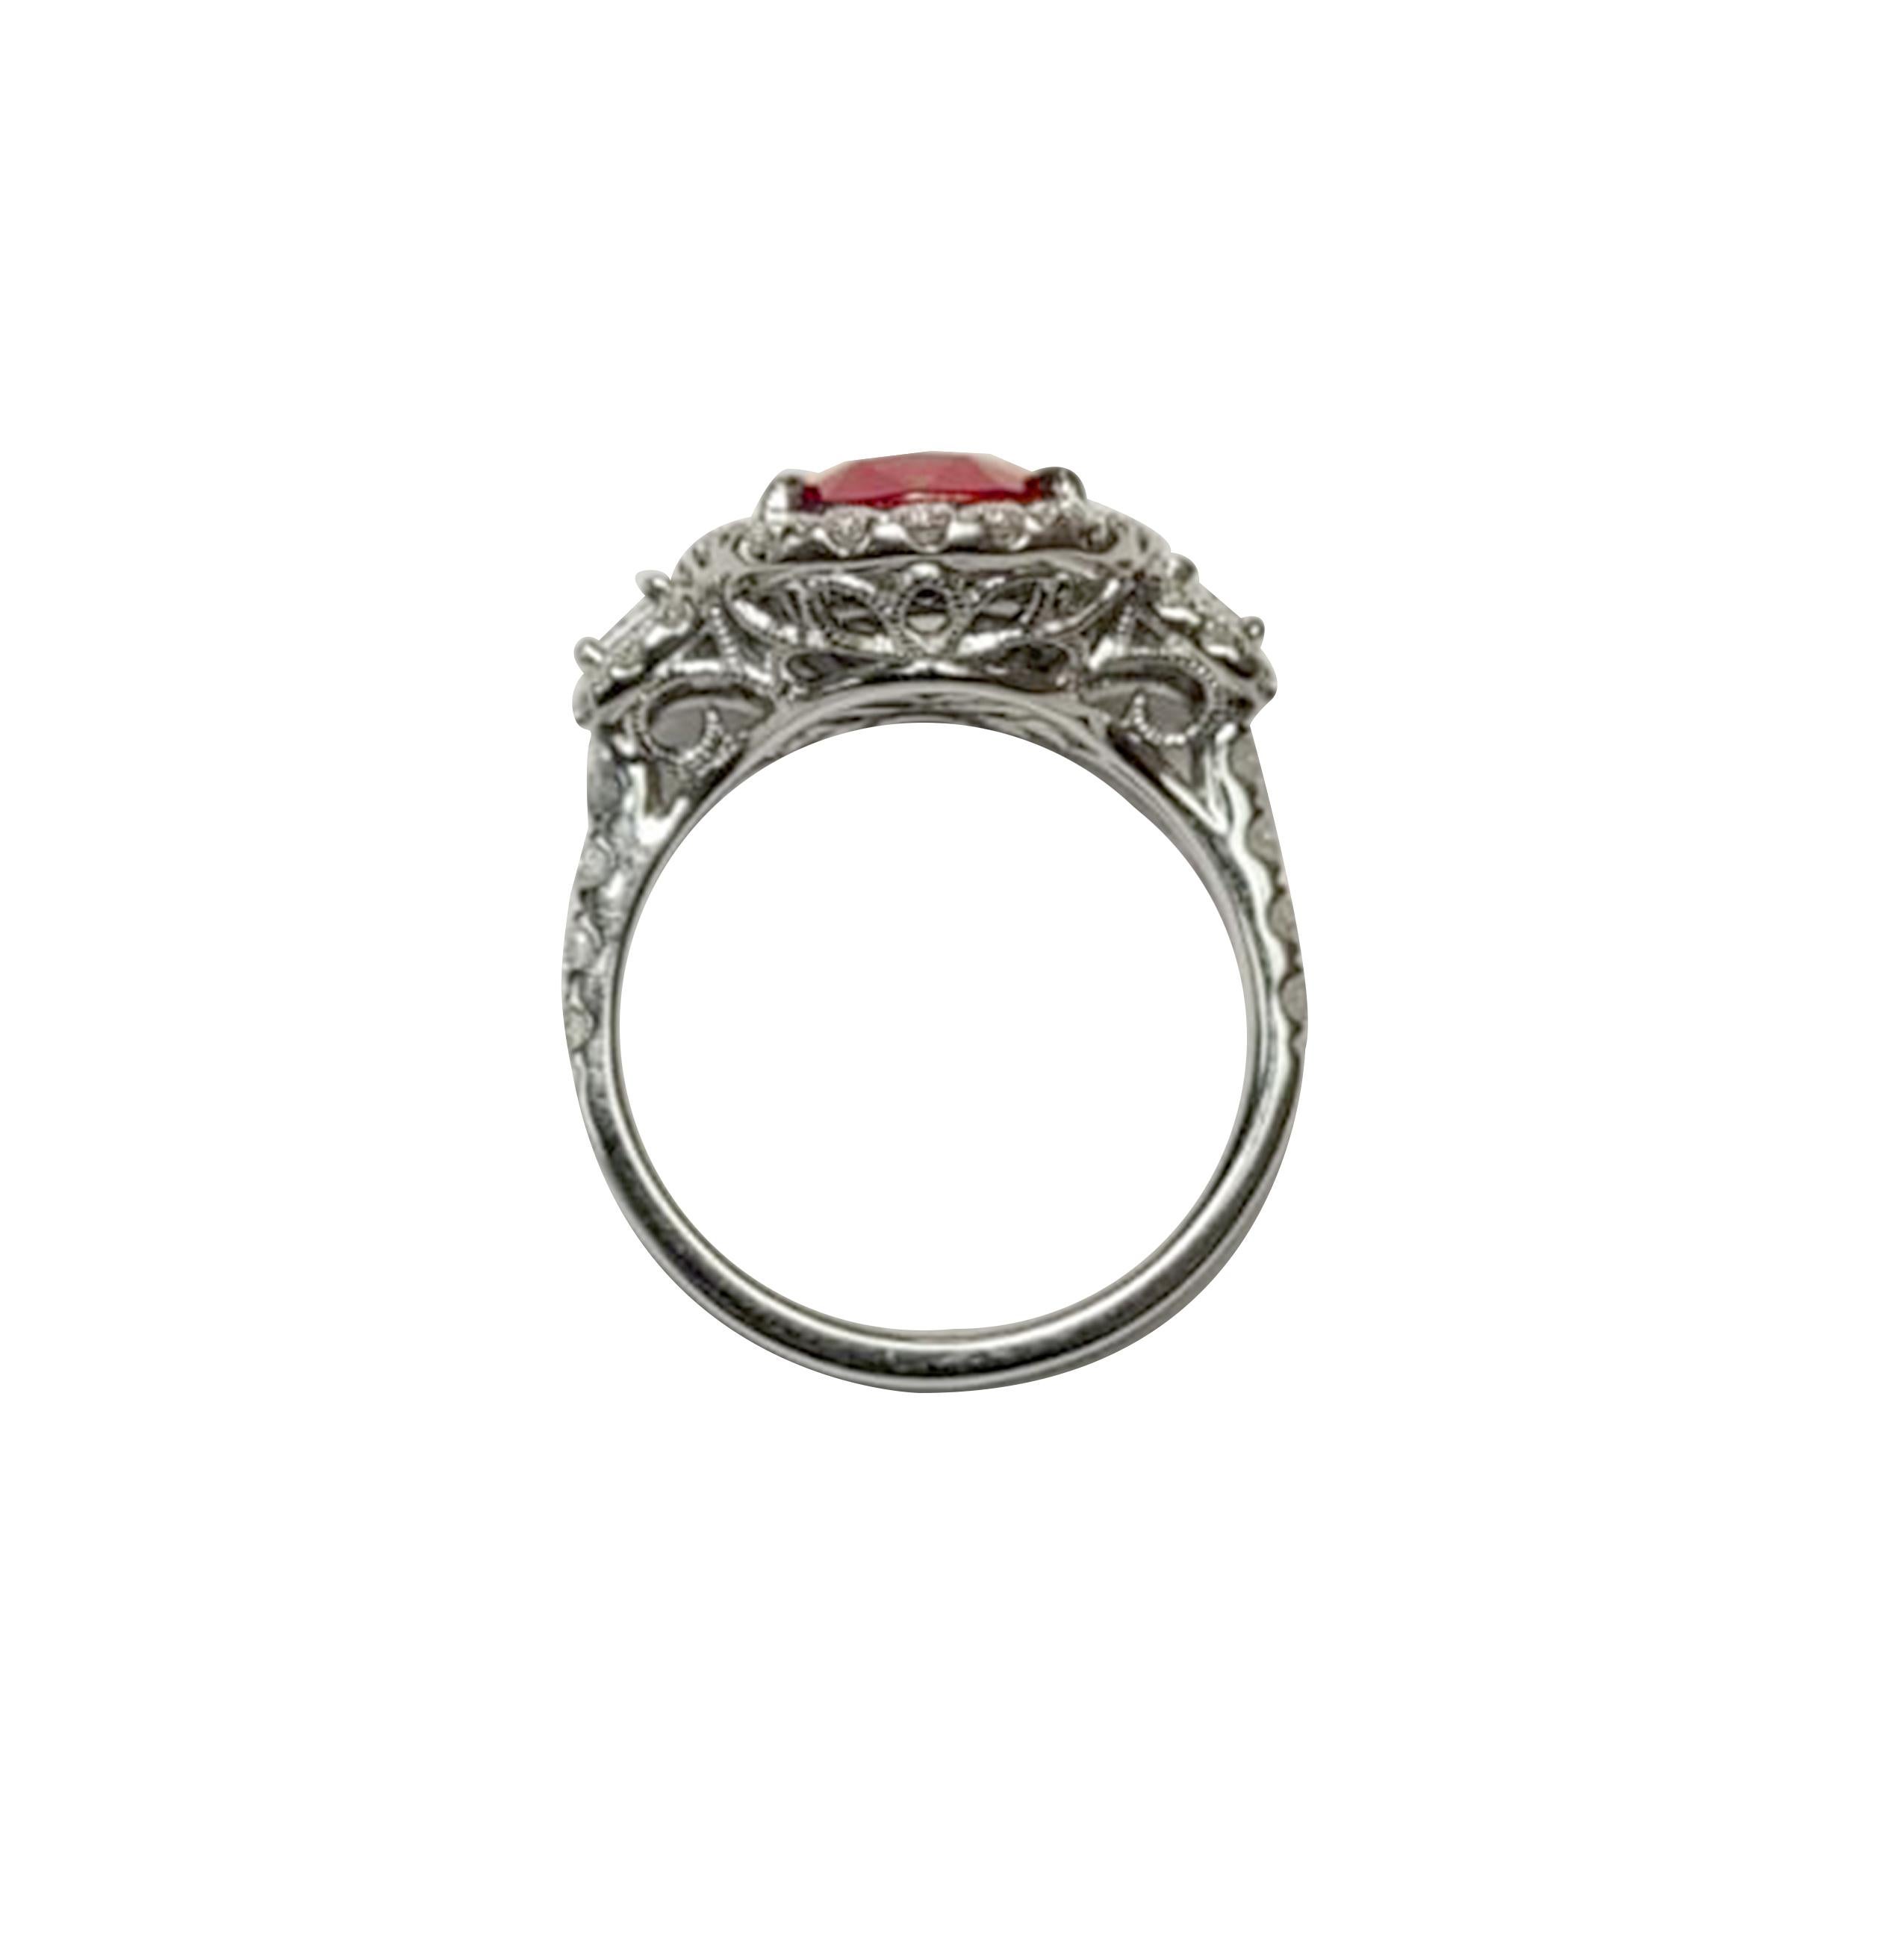 3 stone ruby ring